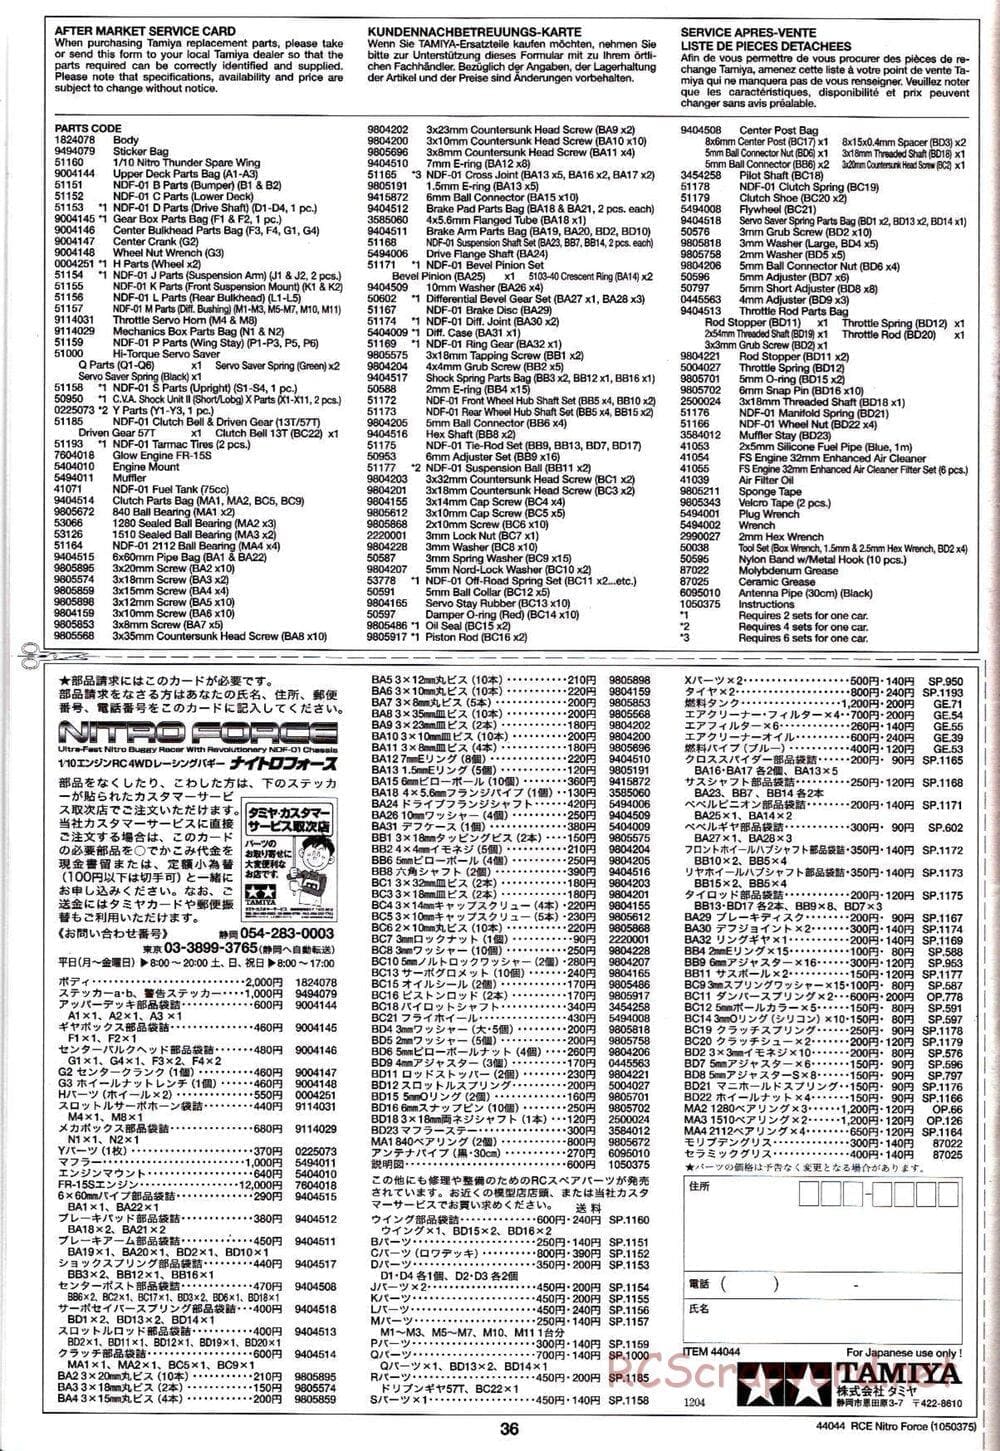 Tamiya - Nitro Force - NDF-01 Chassis - Manual - Page 36